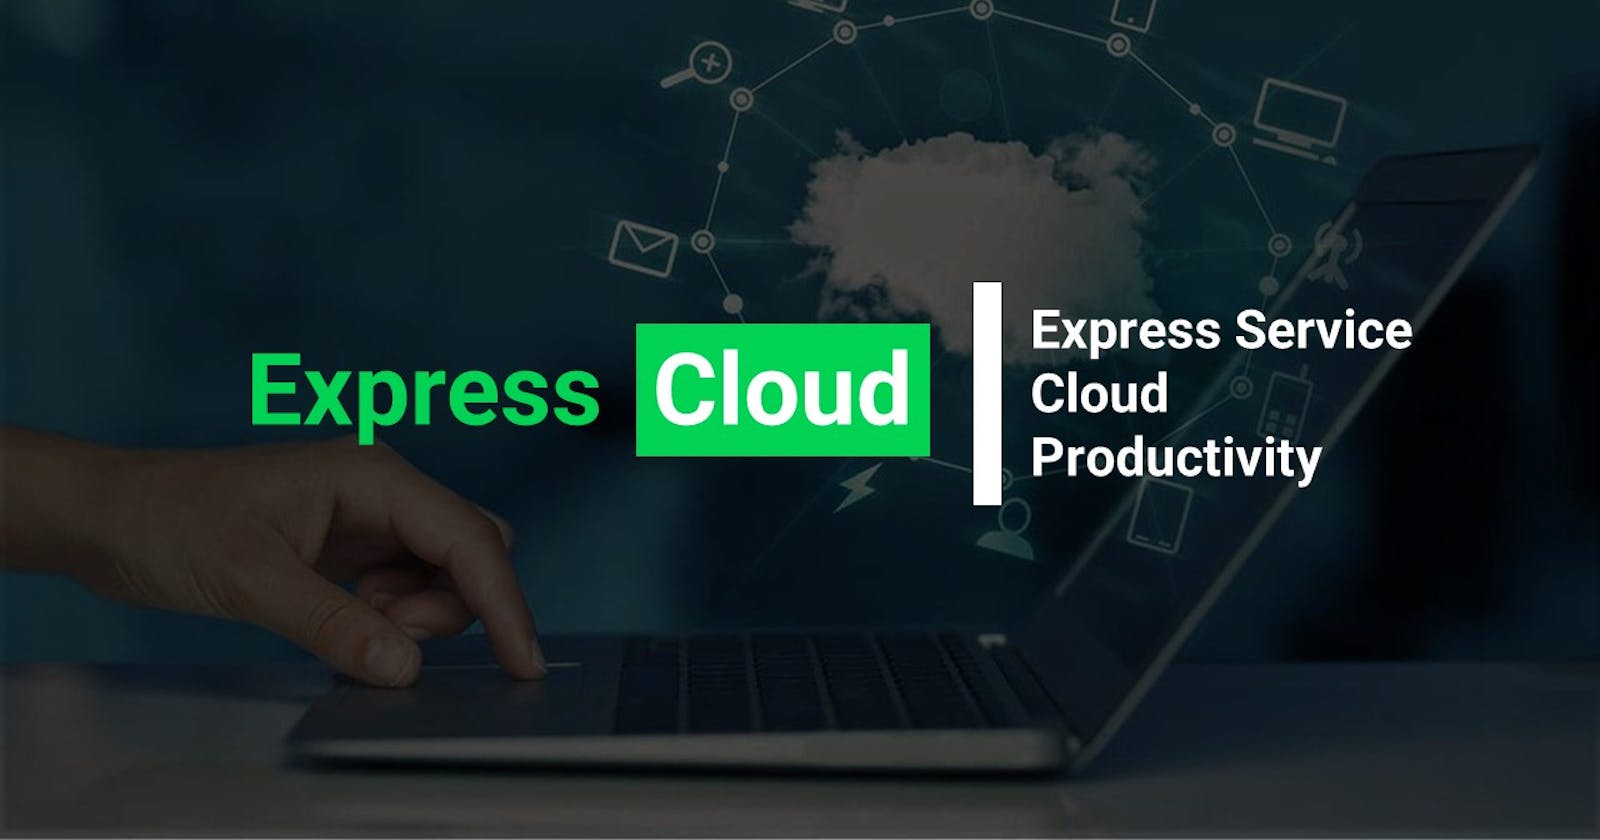 Express Service Cloud Productivity